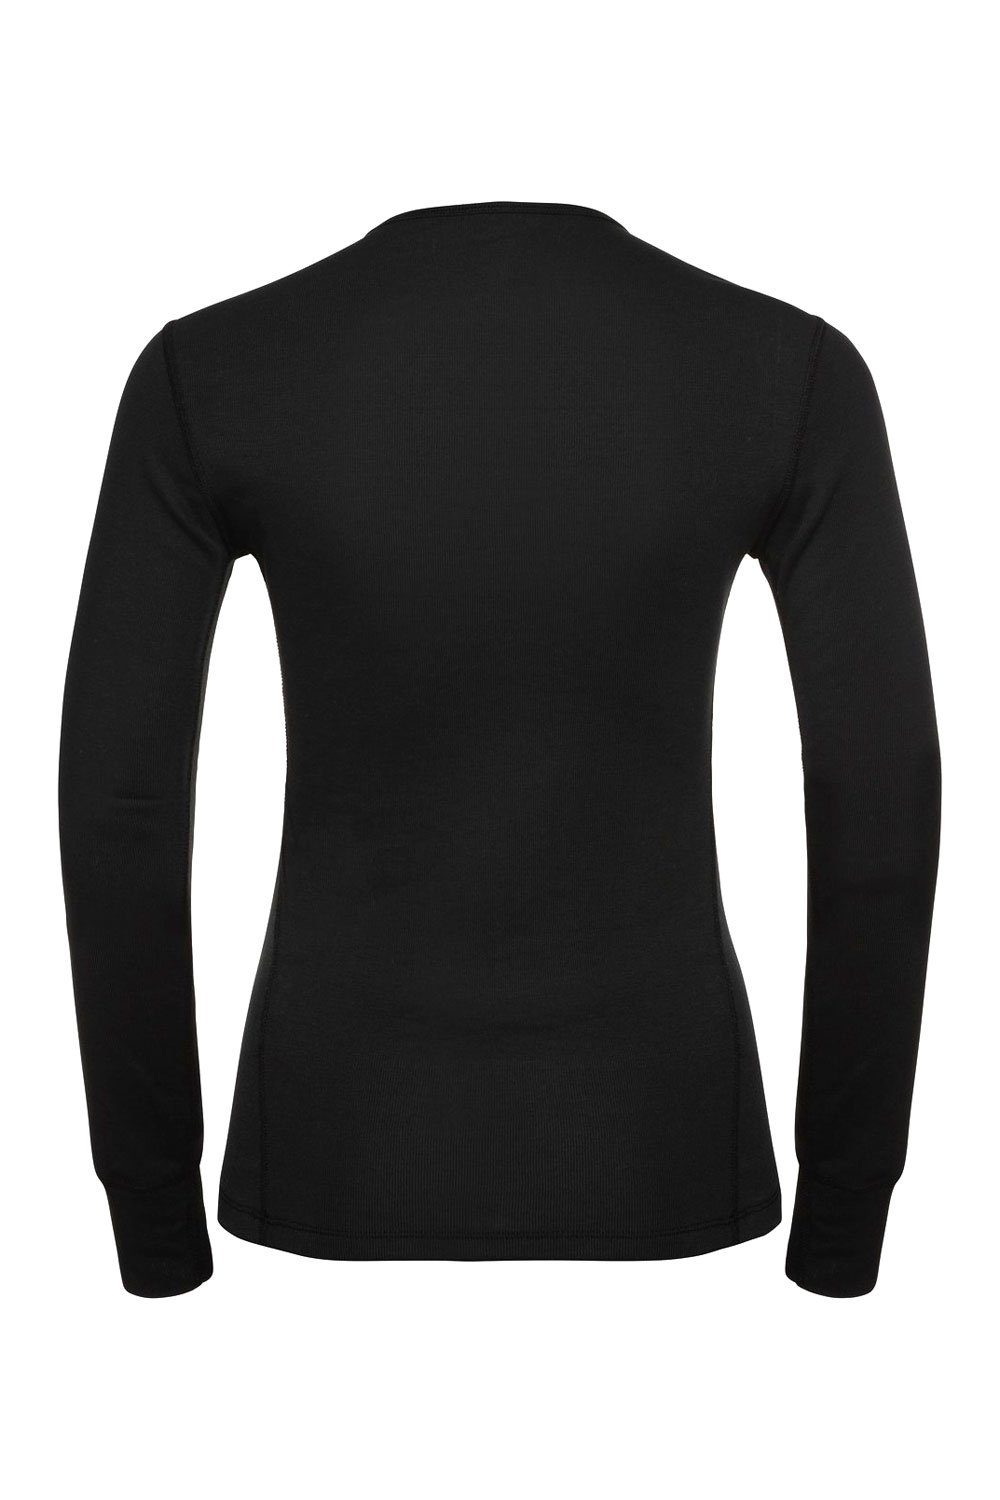 159101 warm Shirt Funktionsshirt black Odlo Eco langarm,